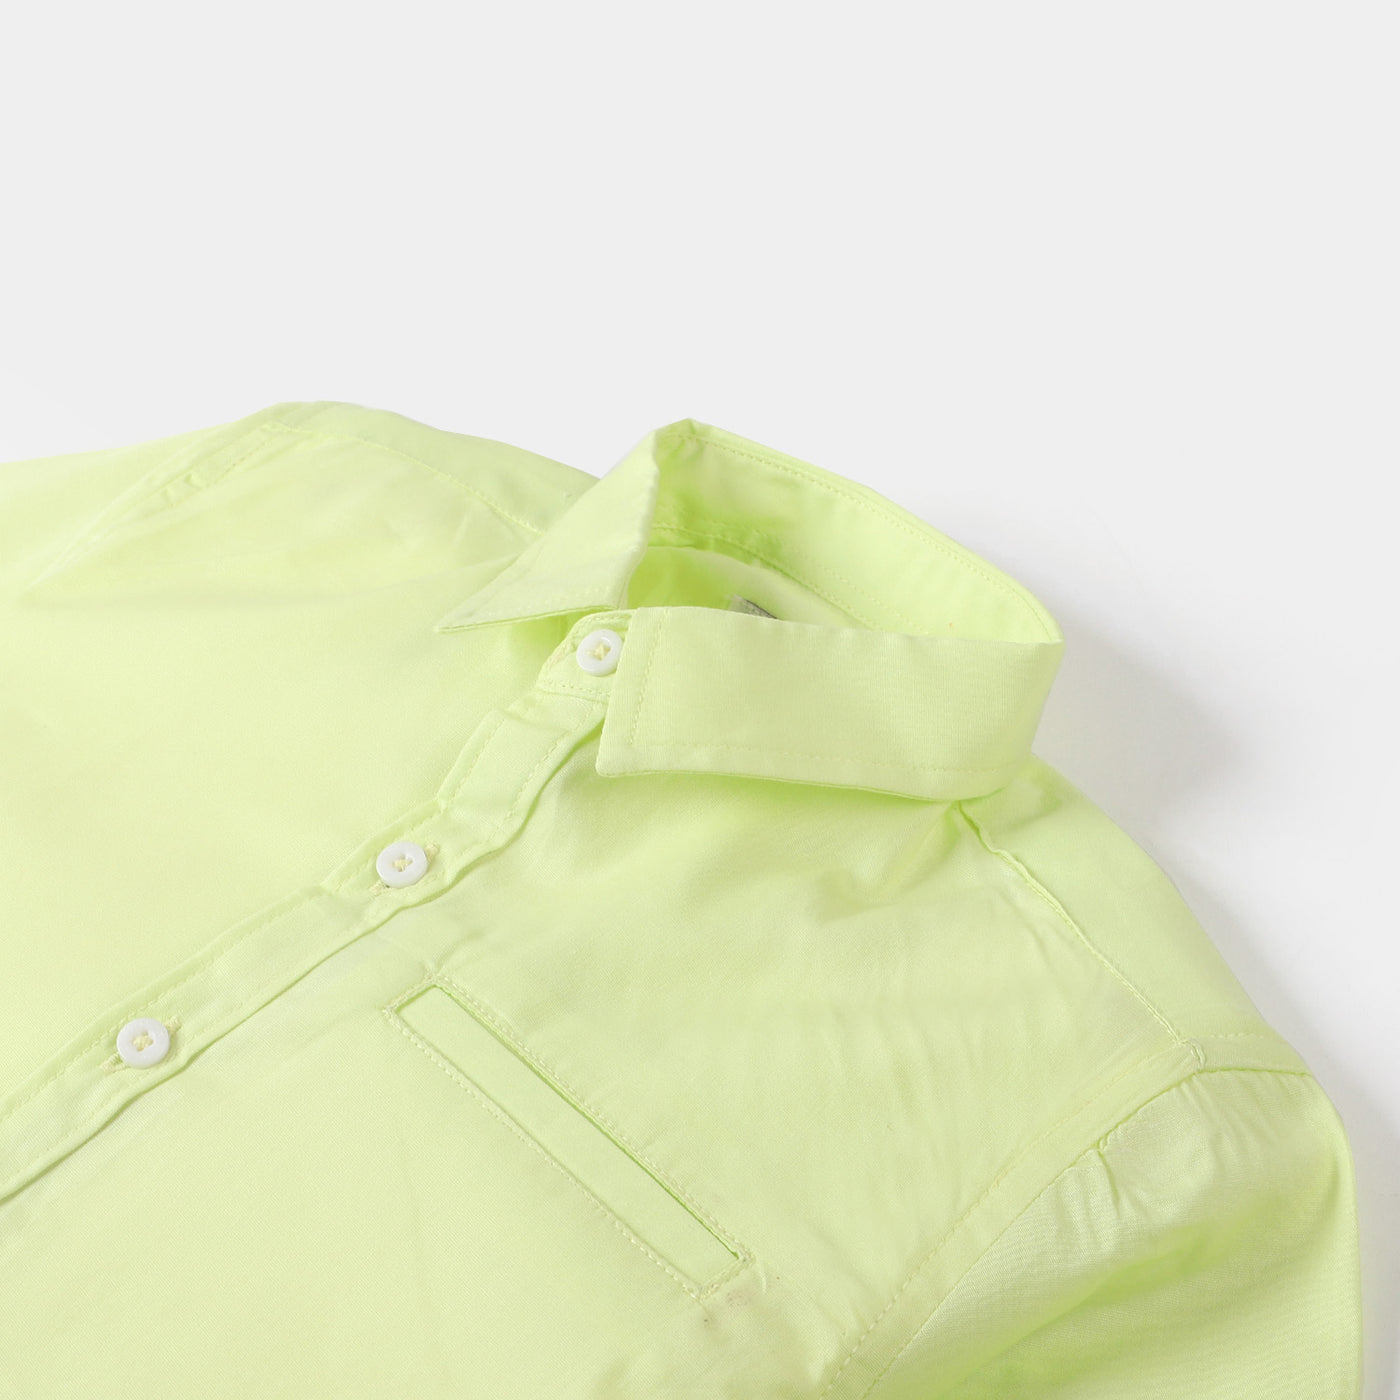 Boys Cotton Casual Shirt No Waves - Light Green